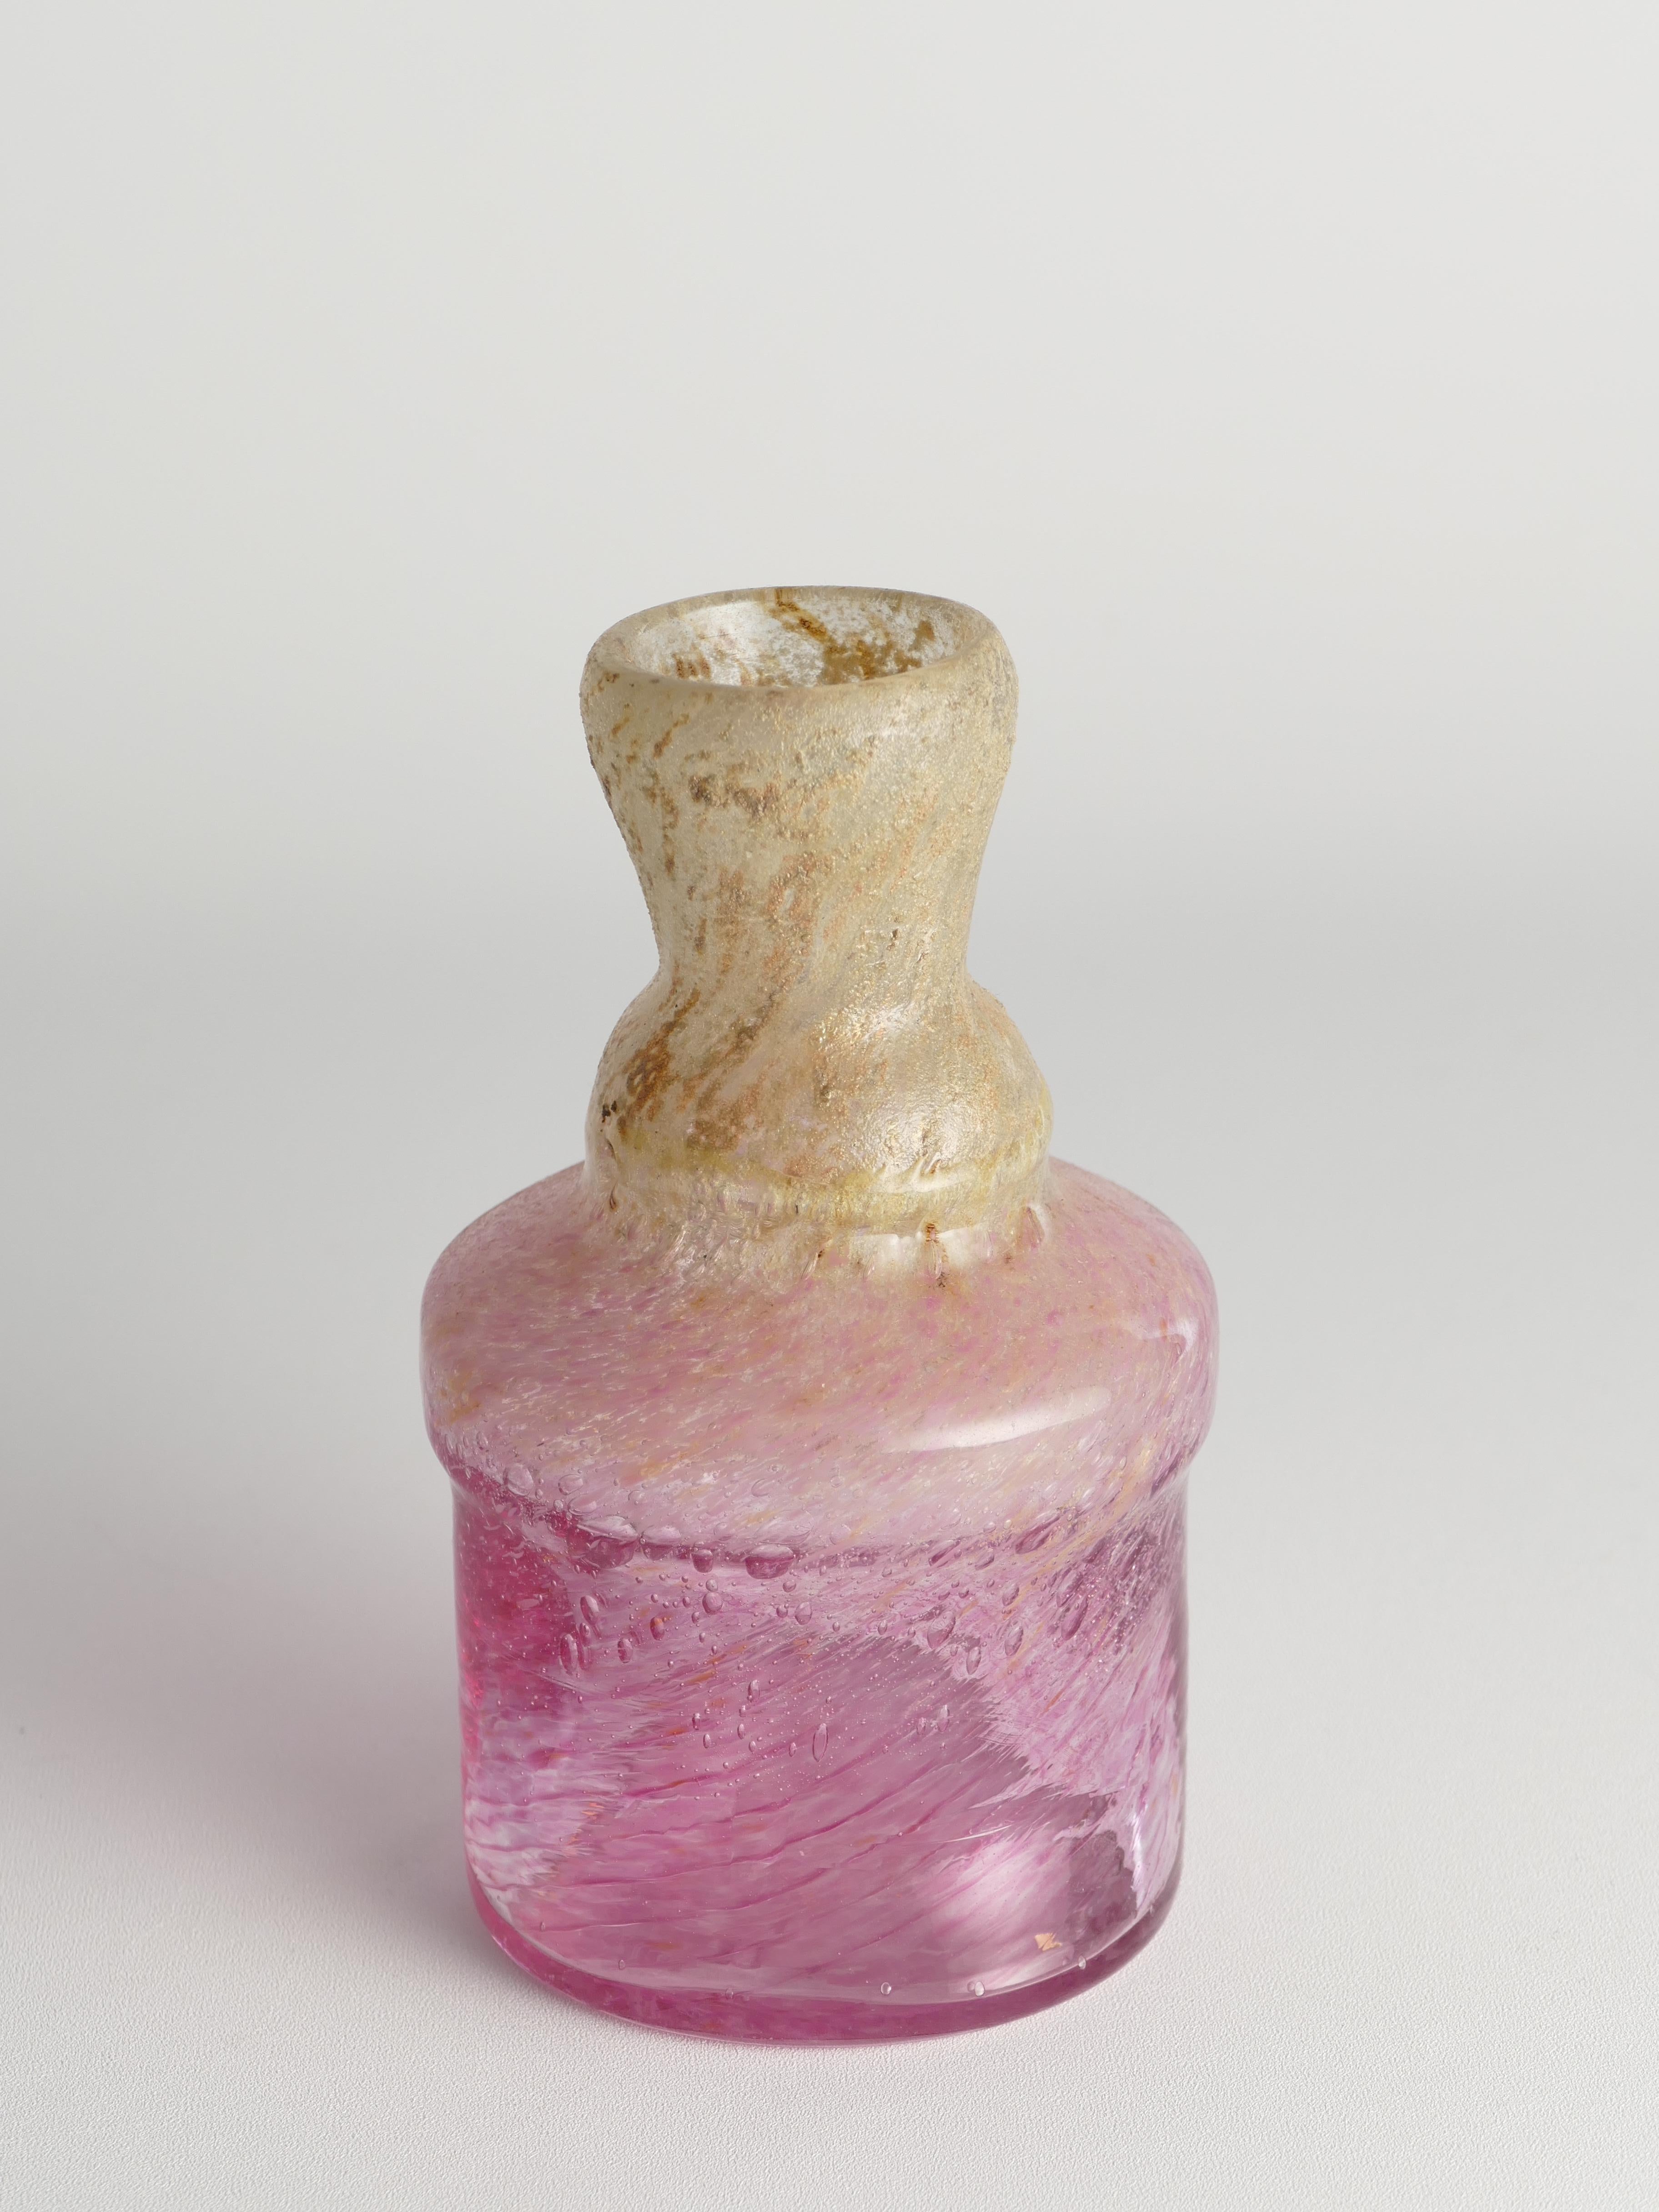 Unique Bubblegum Pink and Yellow Art Glass Vase by Milan Vobruba, Sweden 1980s For Sale 4